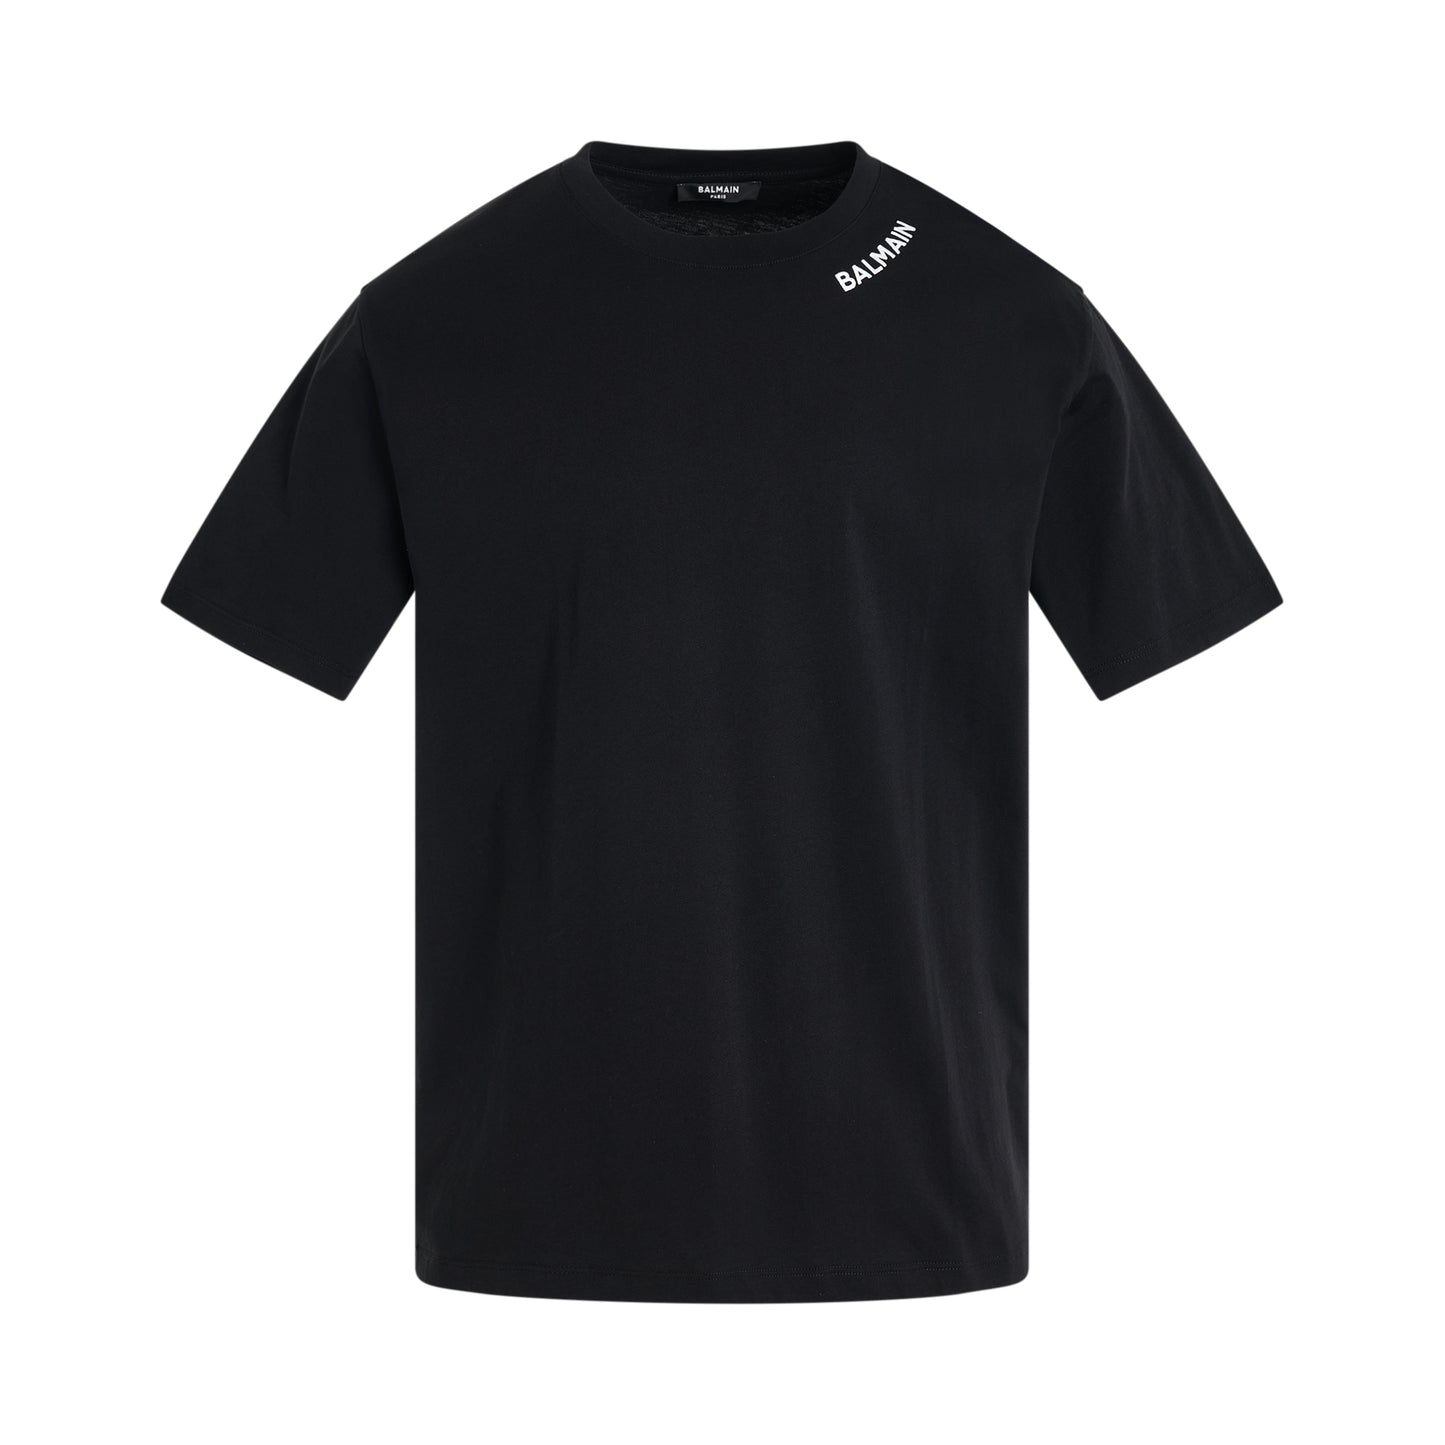 Balmain Stitch Collar T-Shirt in Black/White